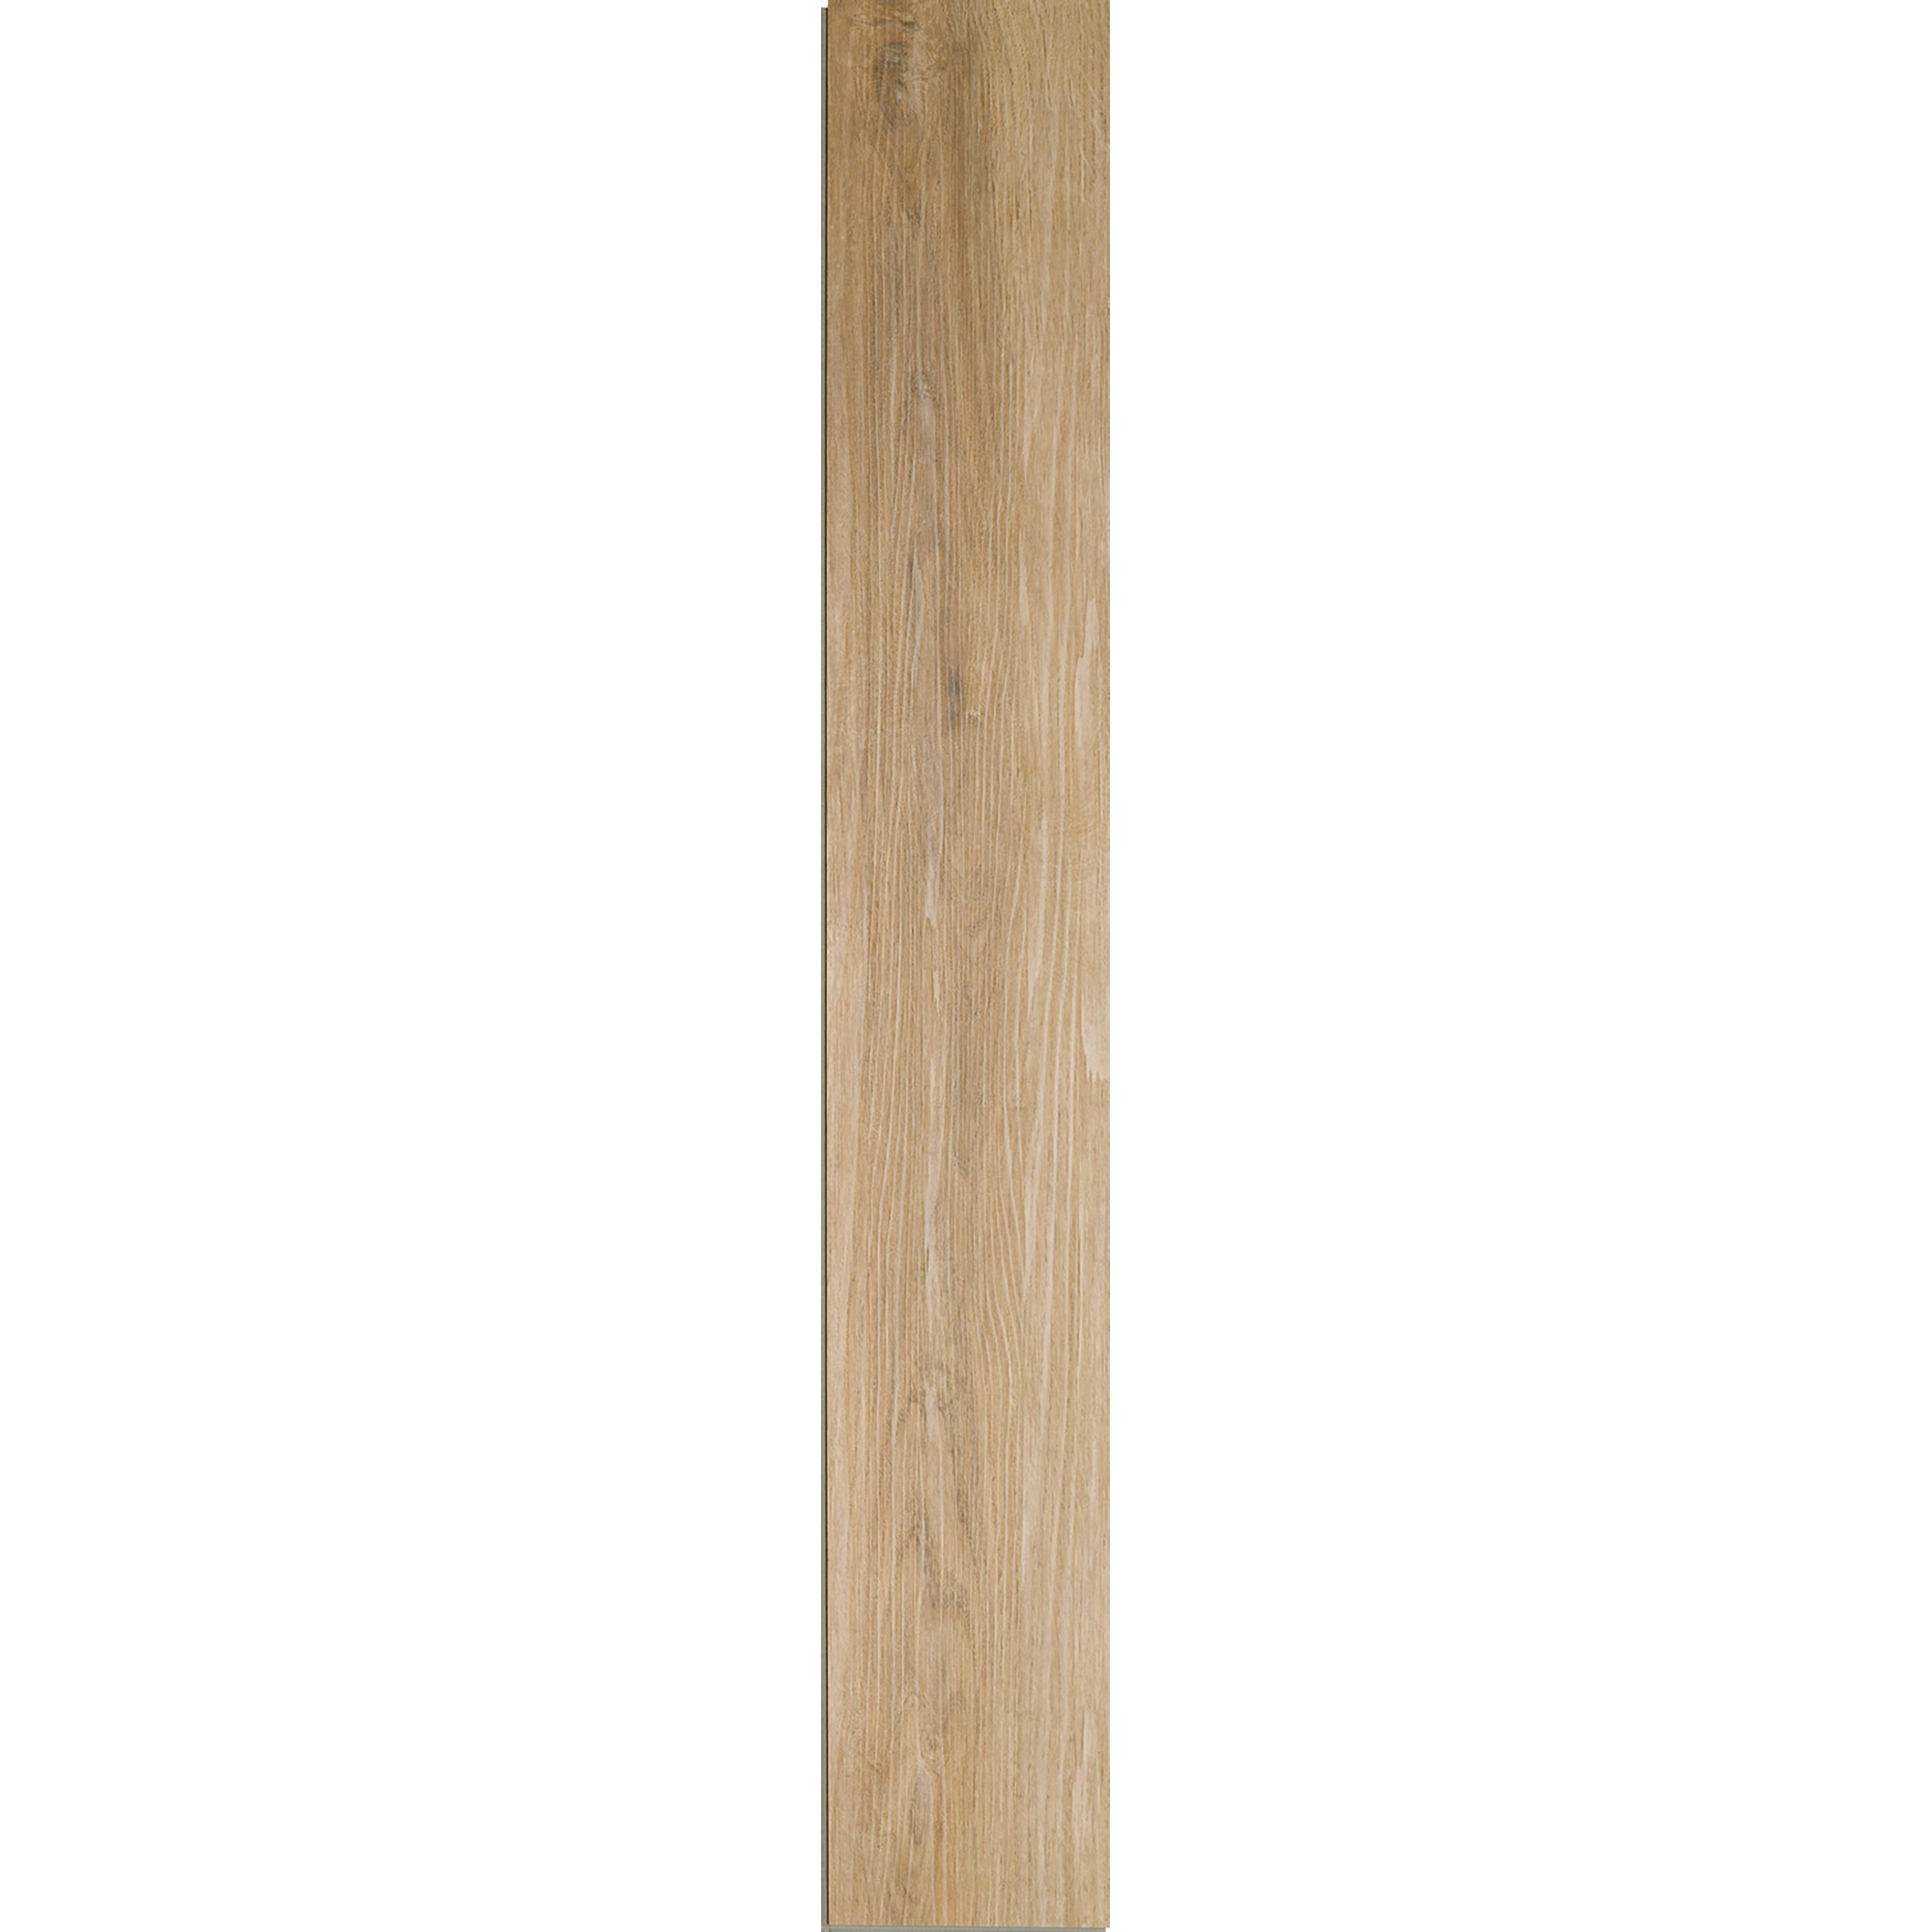 Vinylboden Manuca Wood braun 3,5 mm + product picture